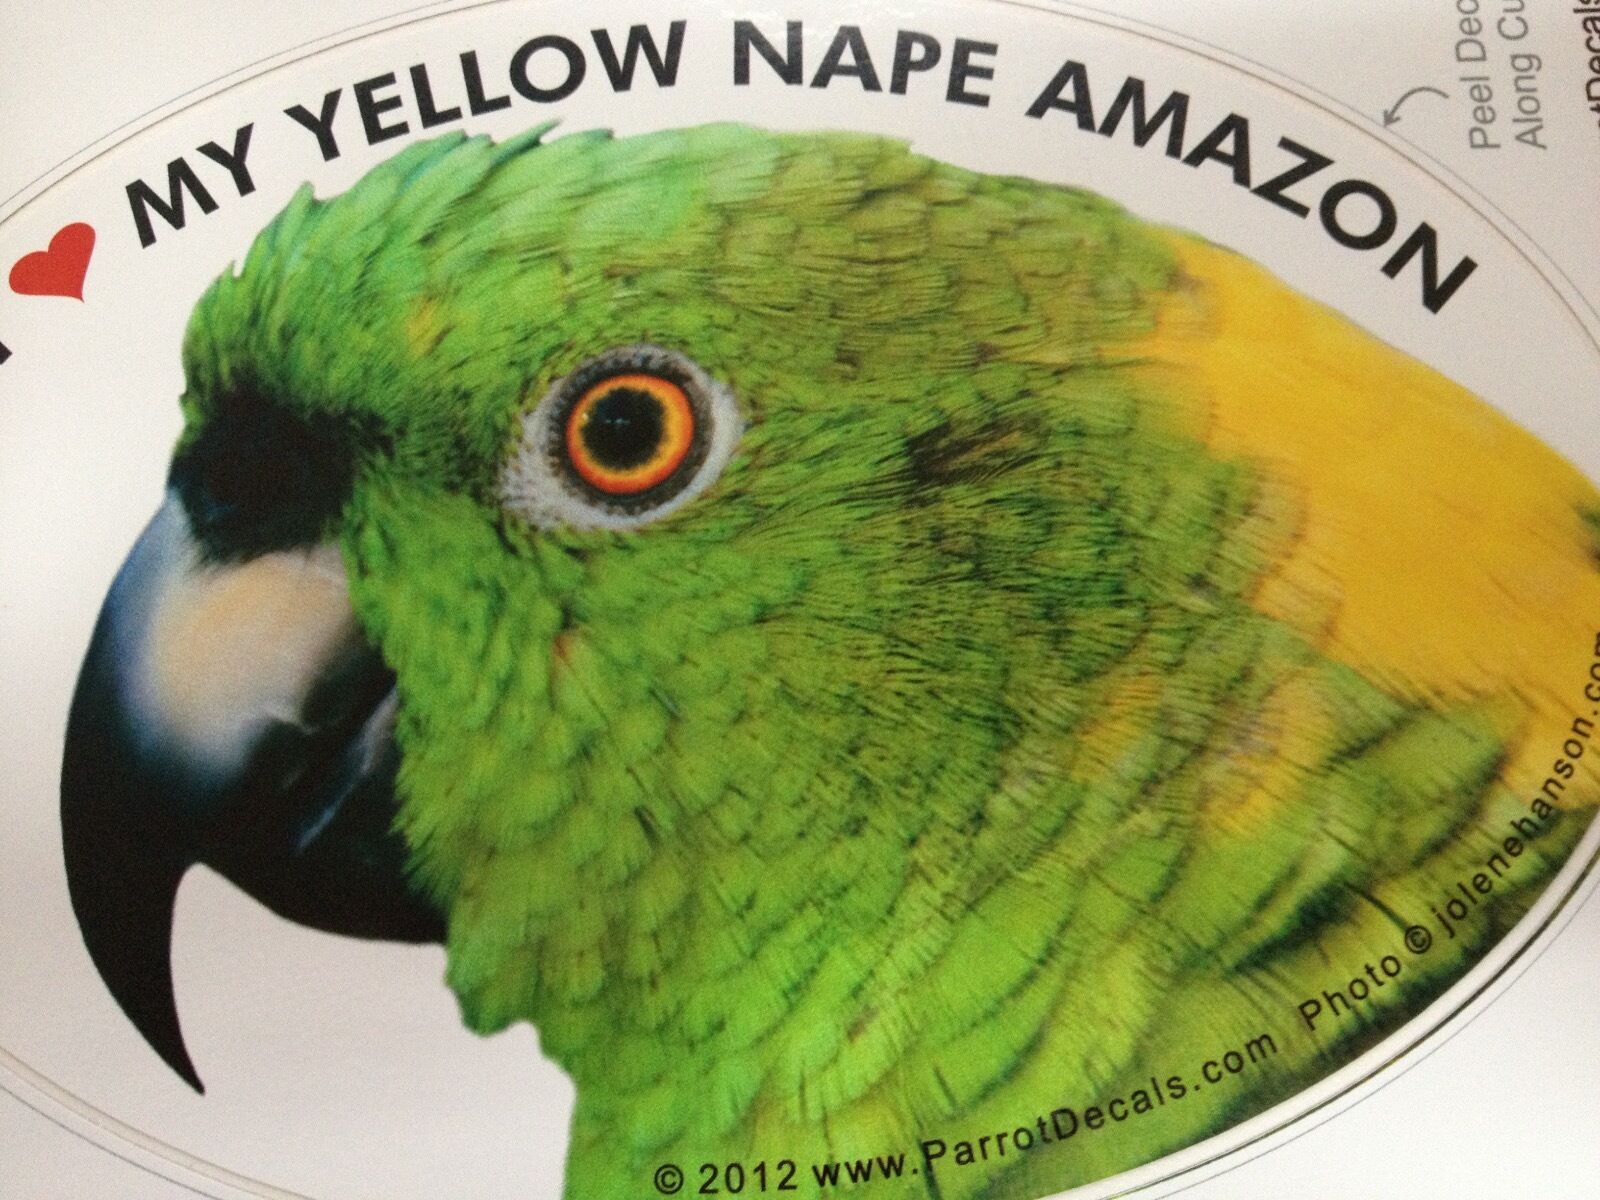 Yellow Nape Amazon Parrot Exotic Bird Vinyl Decal Bumper Sticker